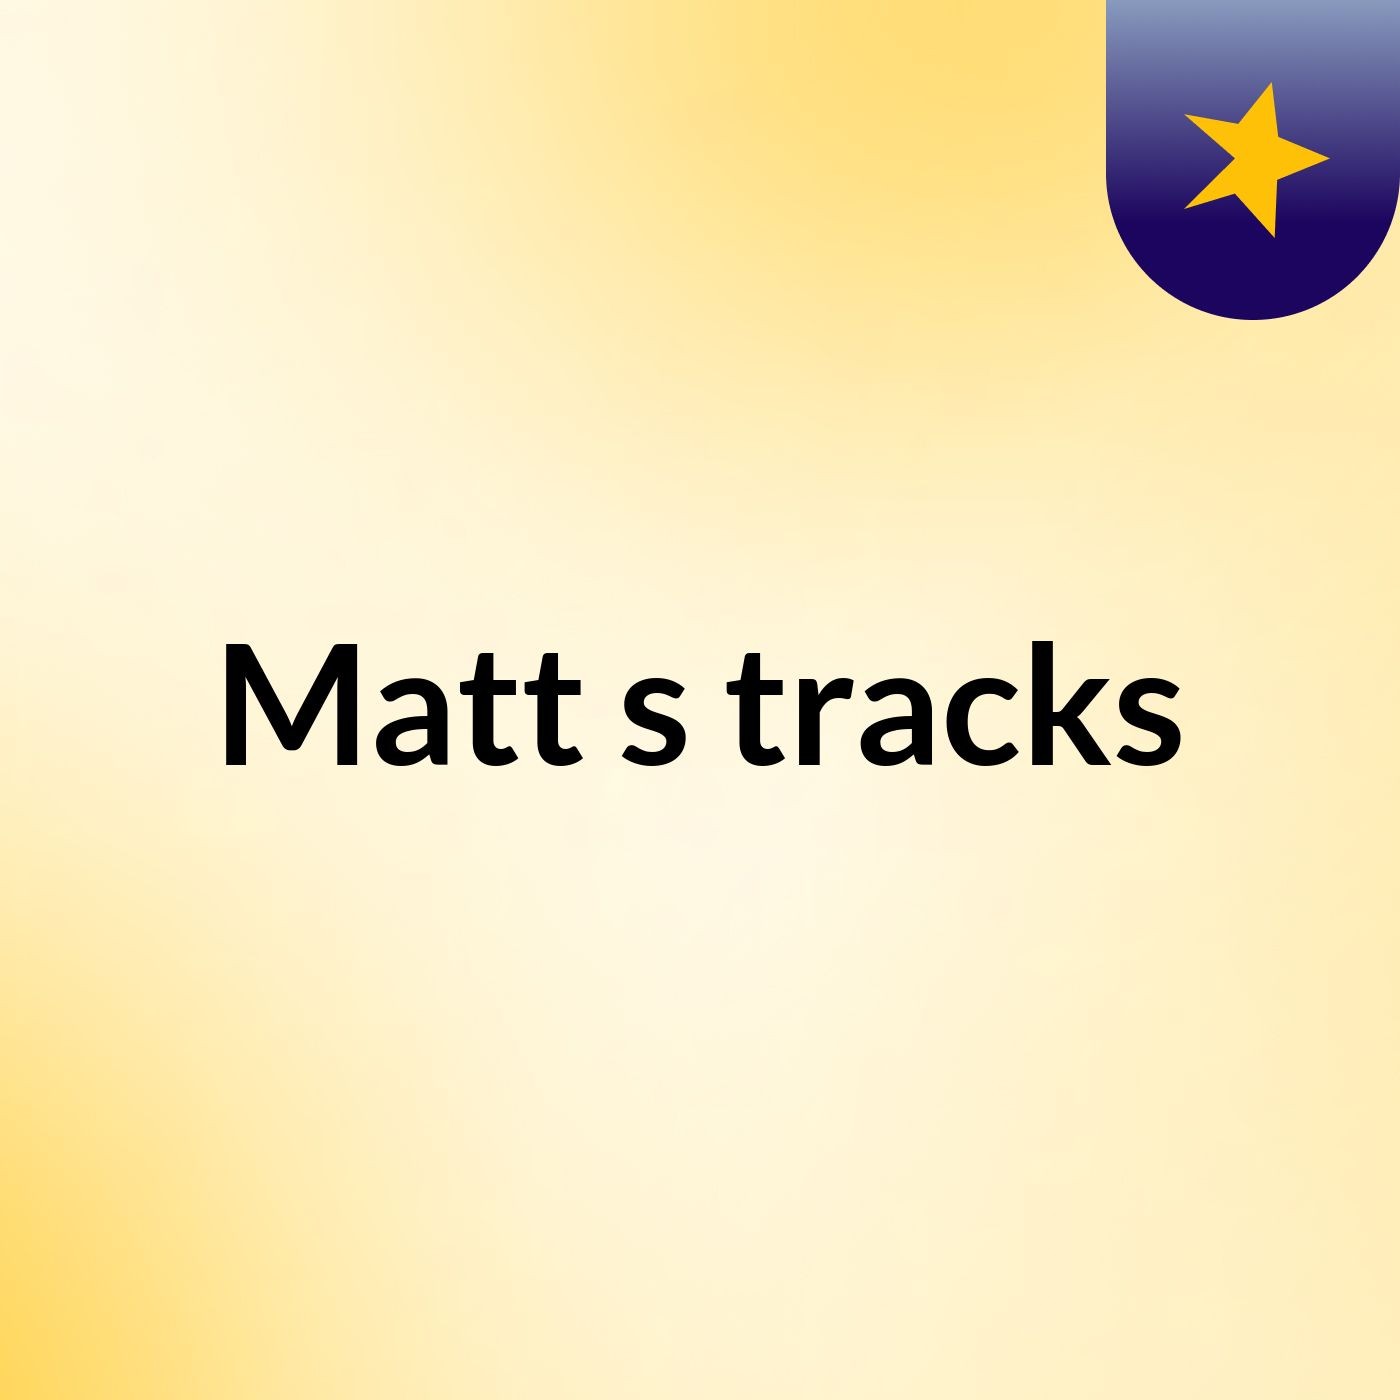 Matt's tracks